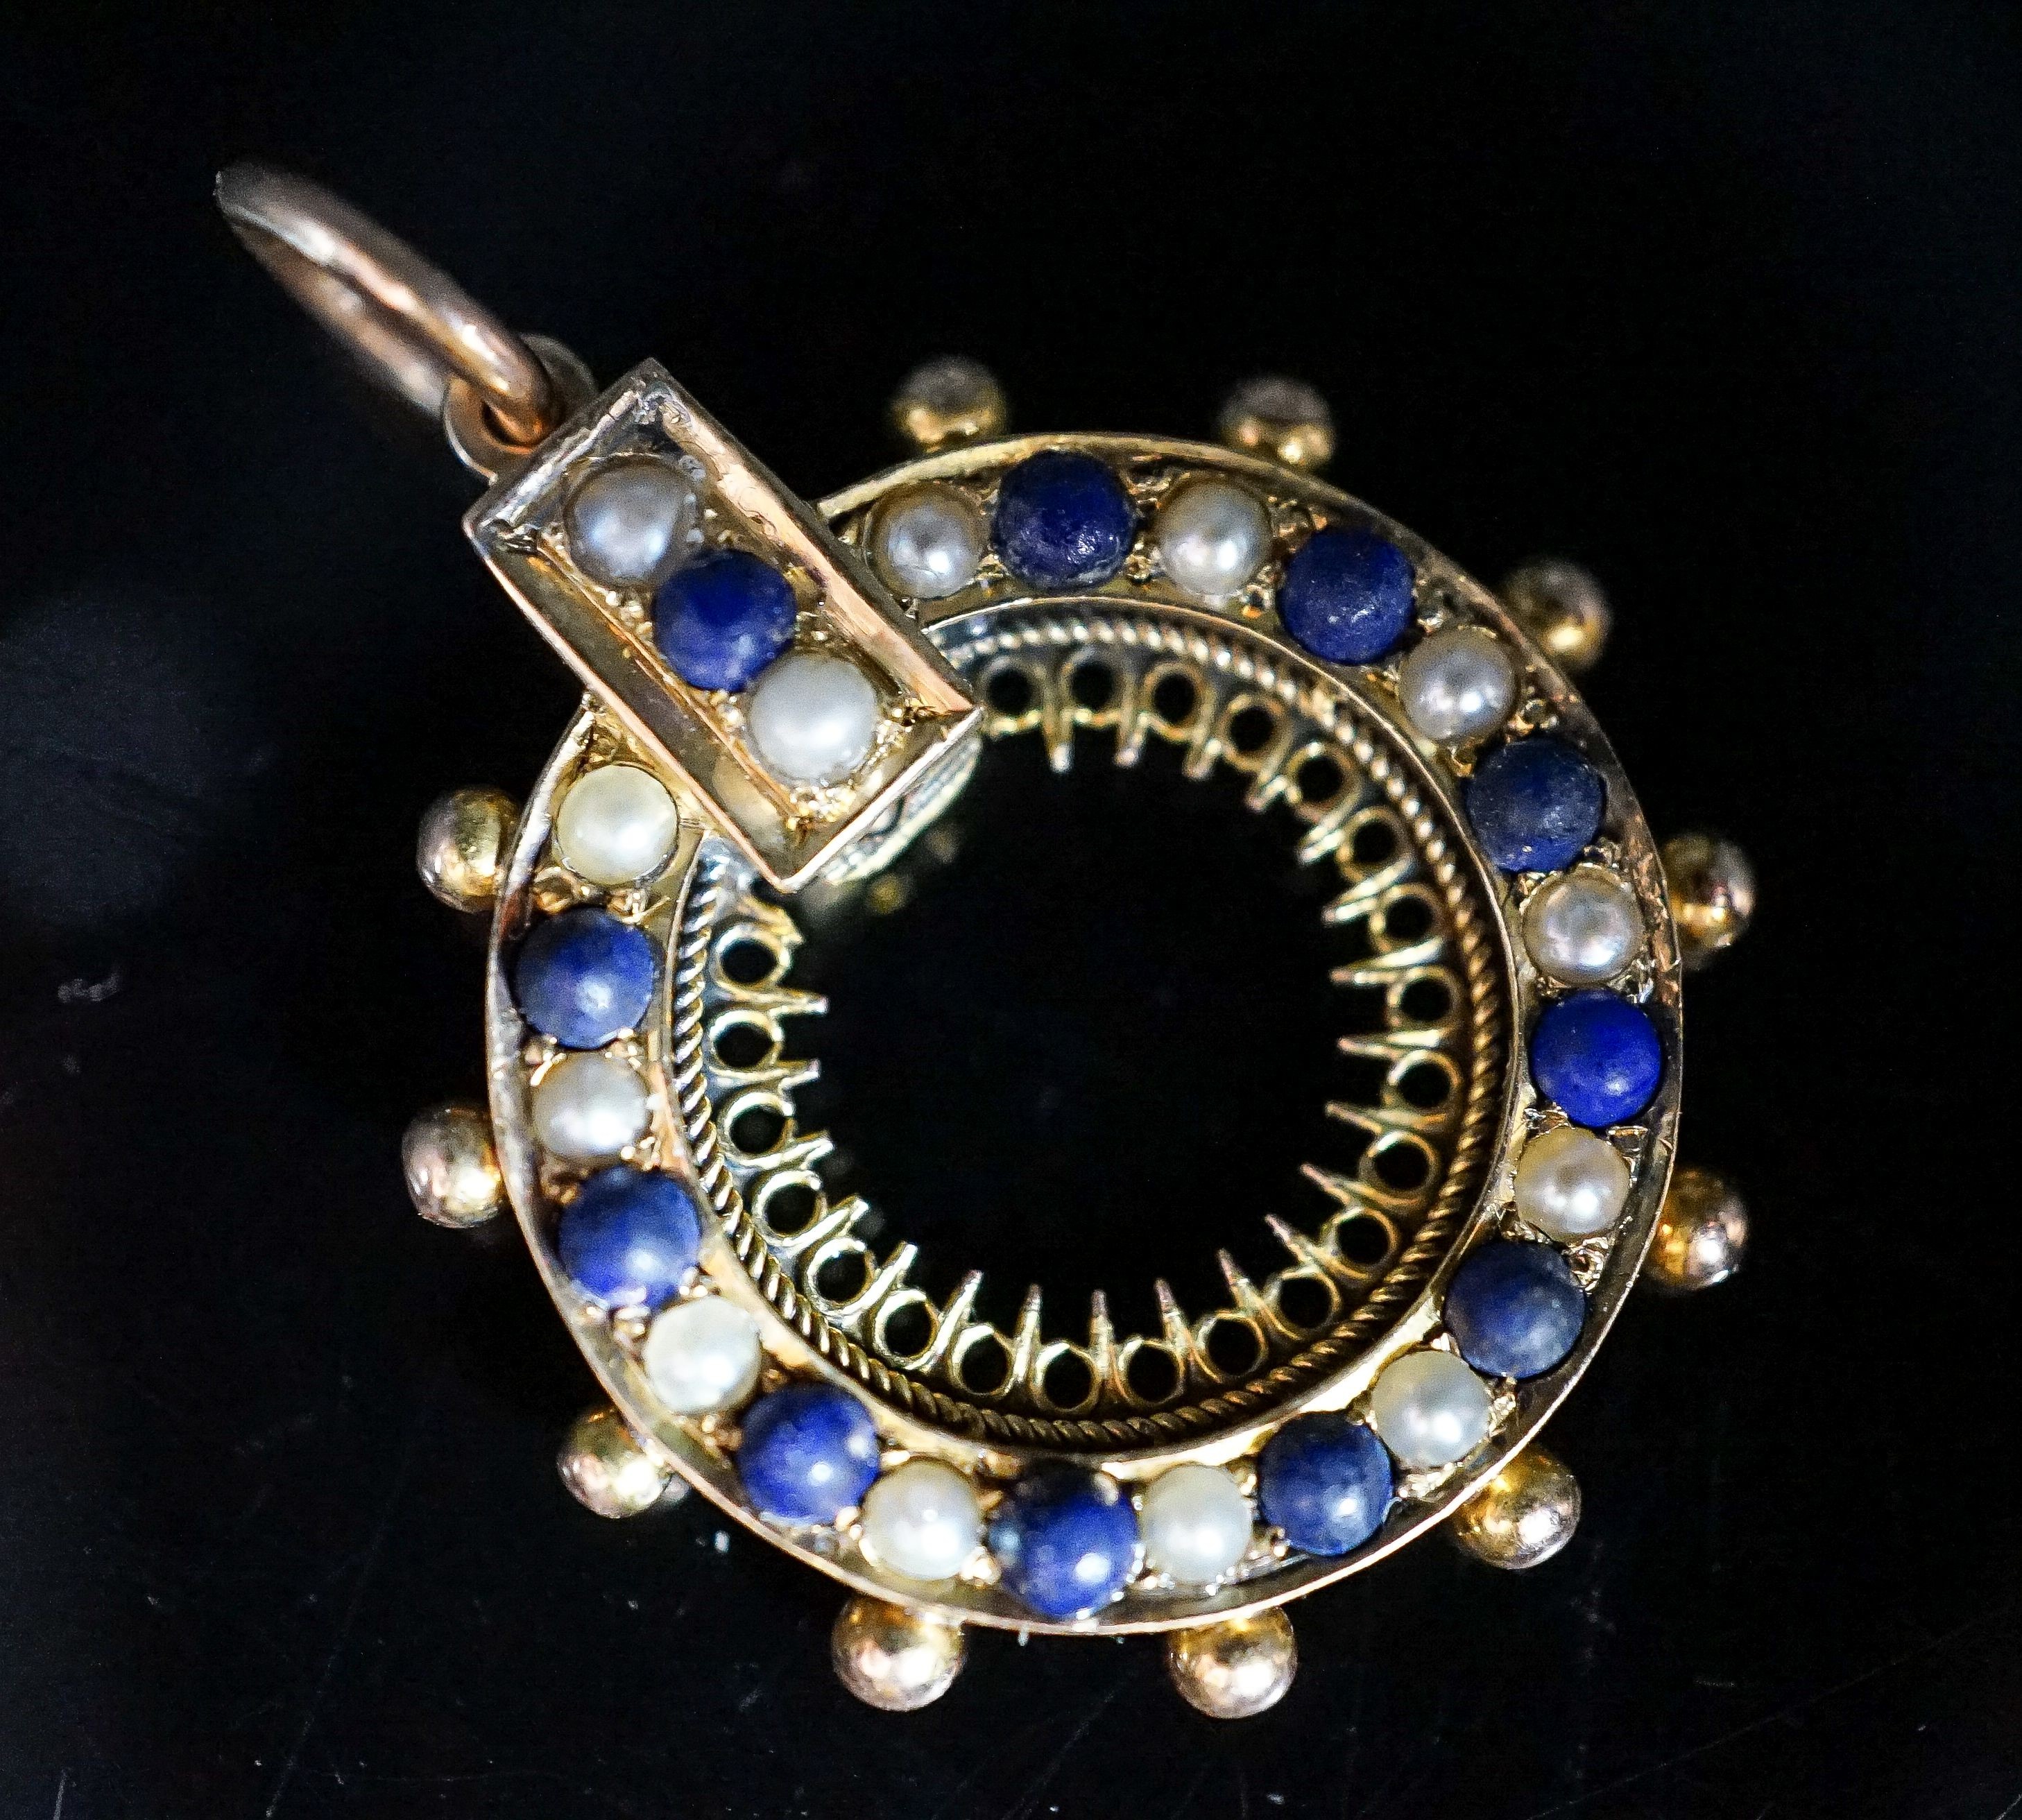 A yellow metal, lapis lazuli and split pearl set wheel pendant, 22mm, gross weight 3.4 grams